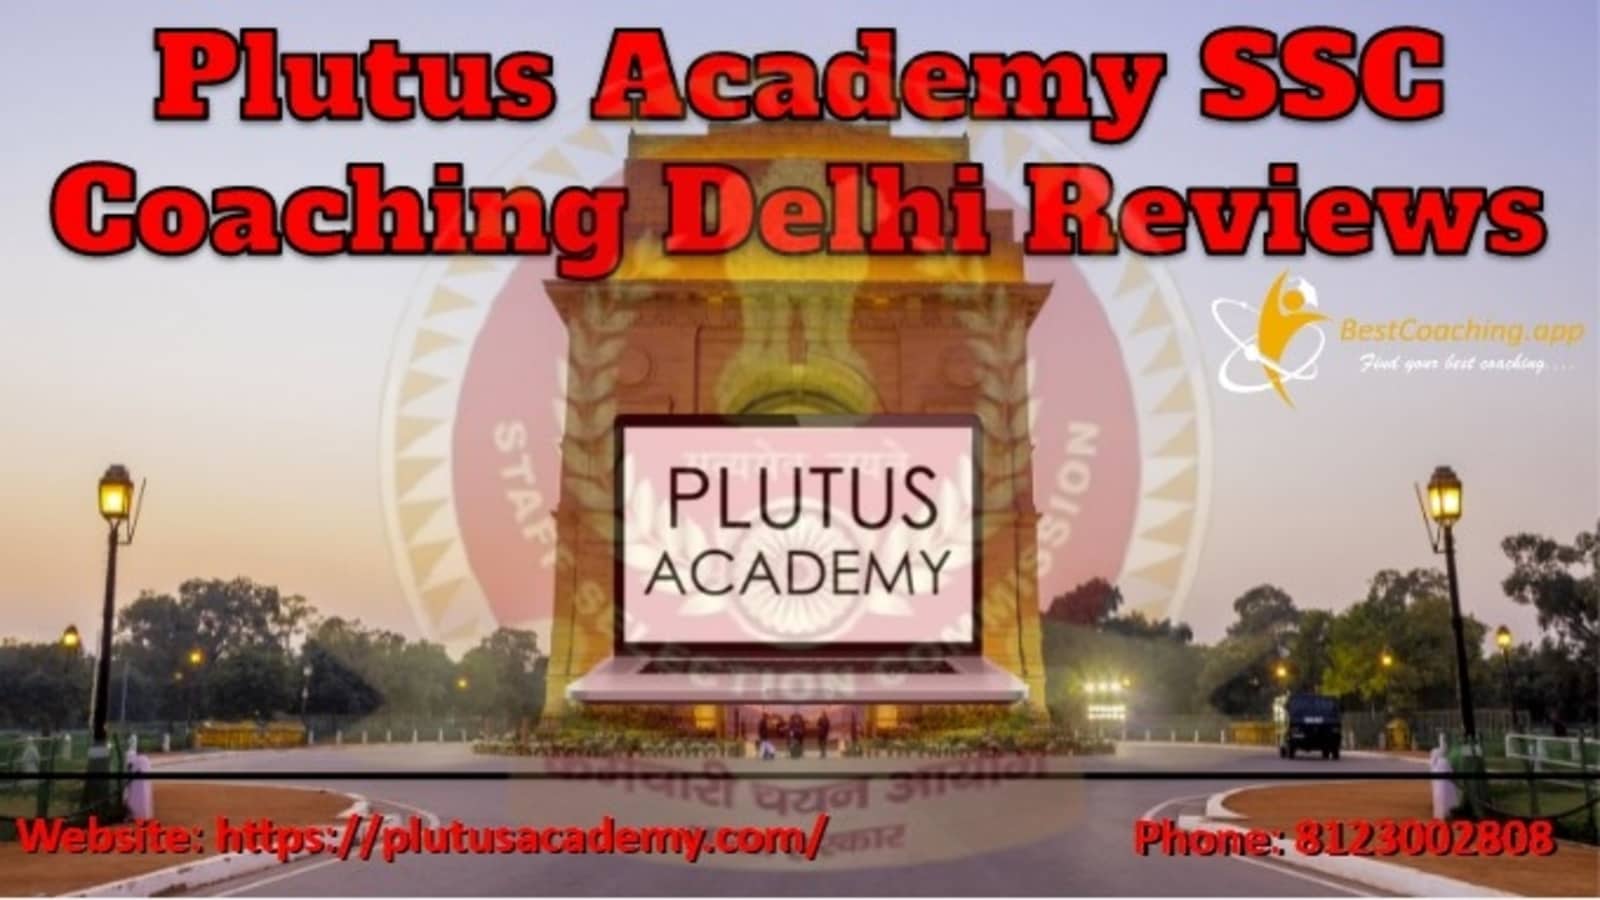 Plutus Academy SSC Coaching in Delhi